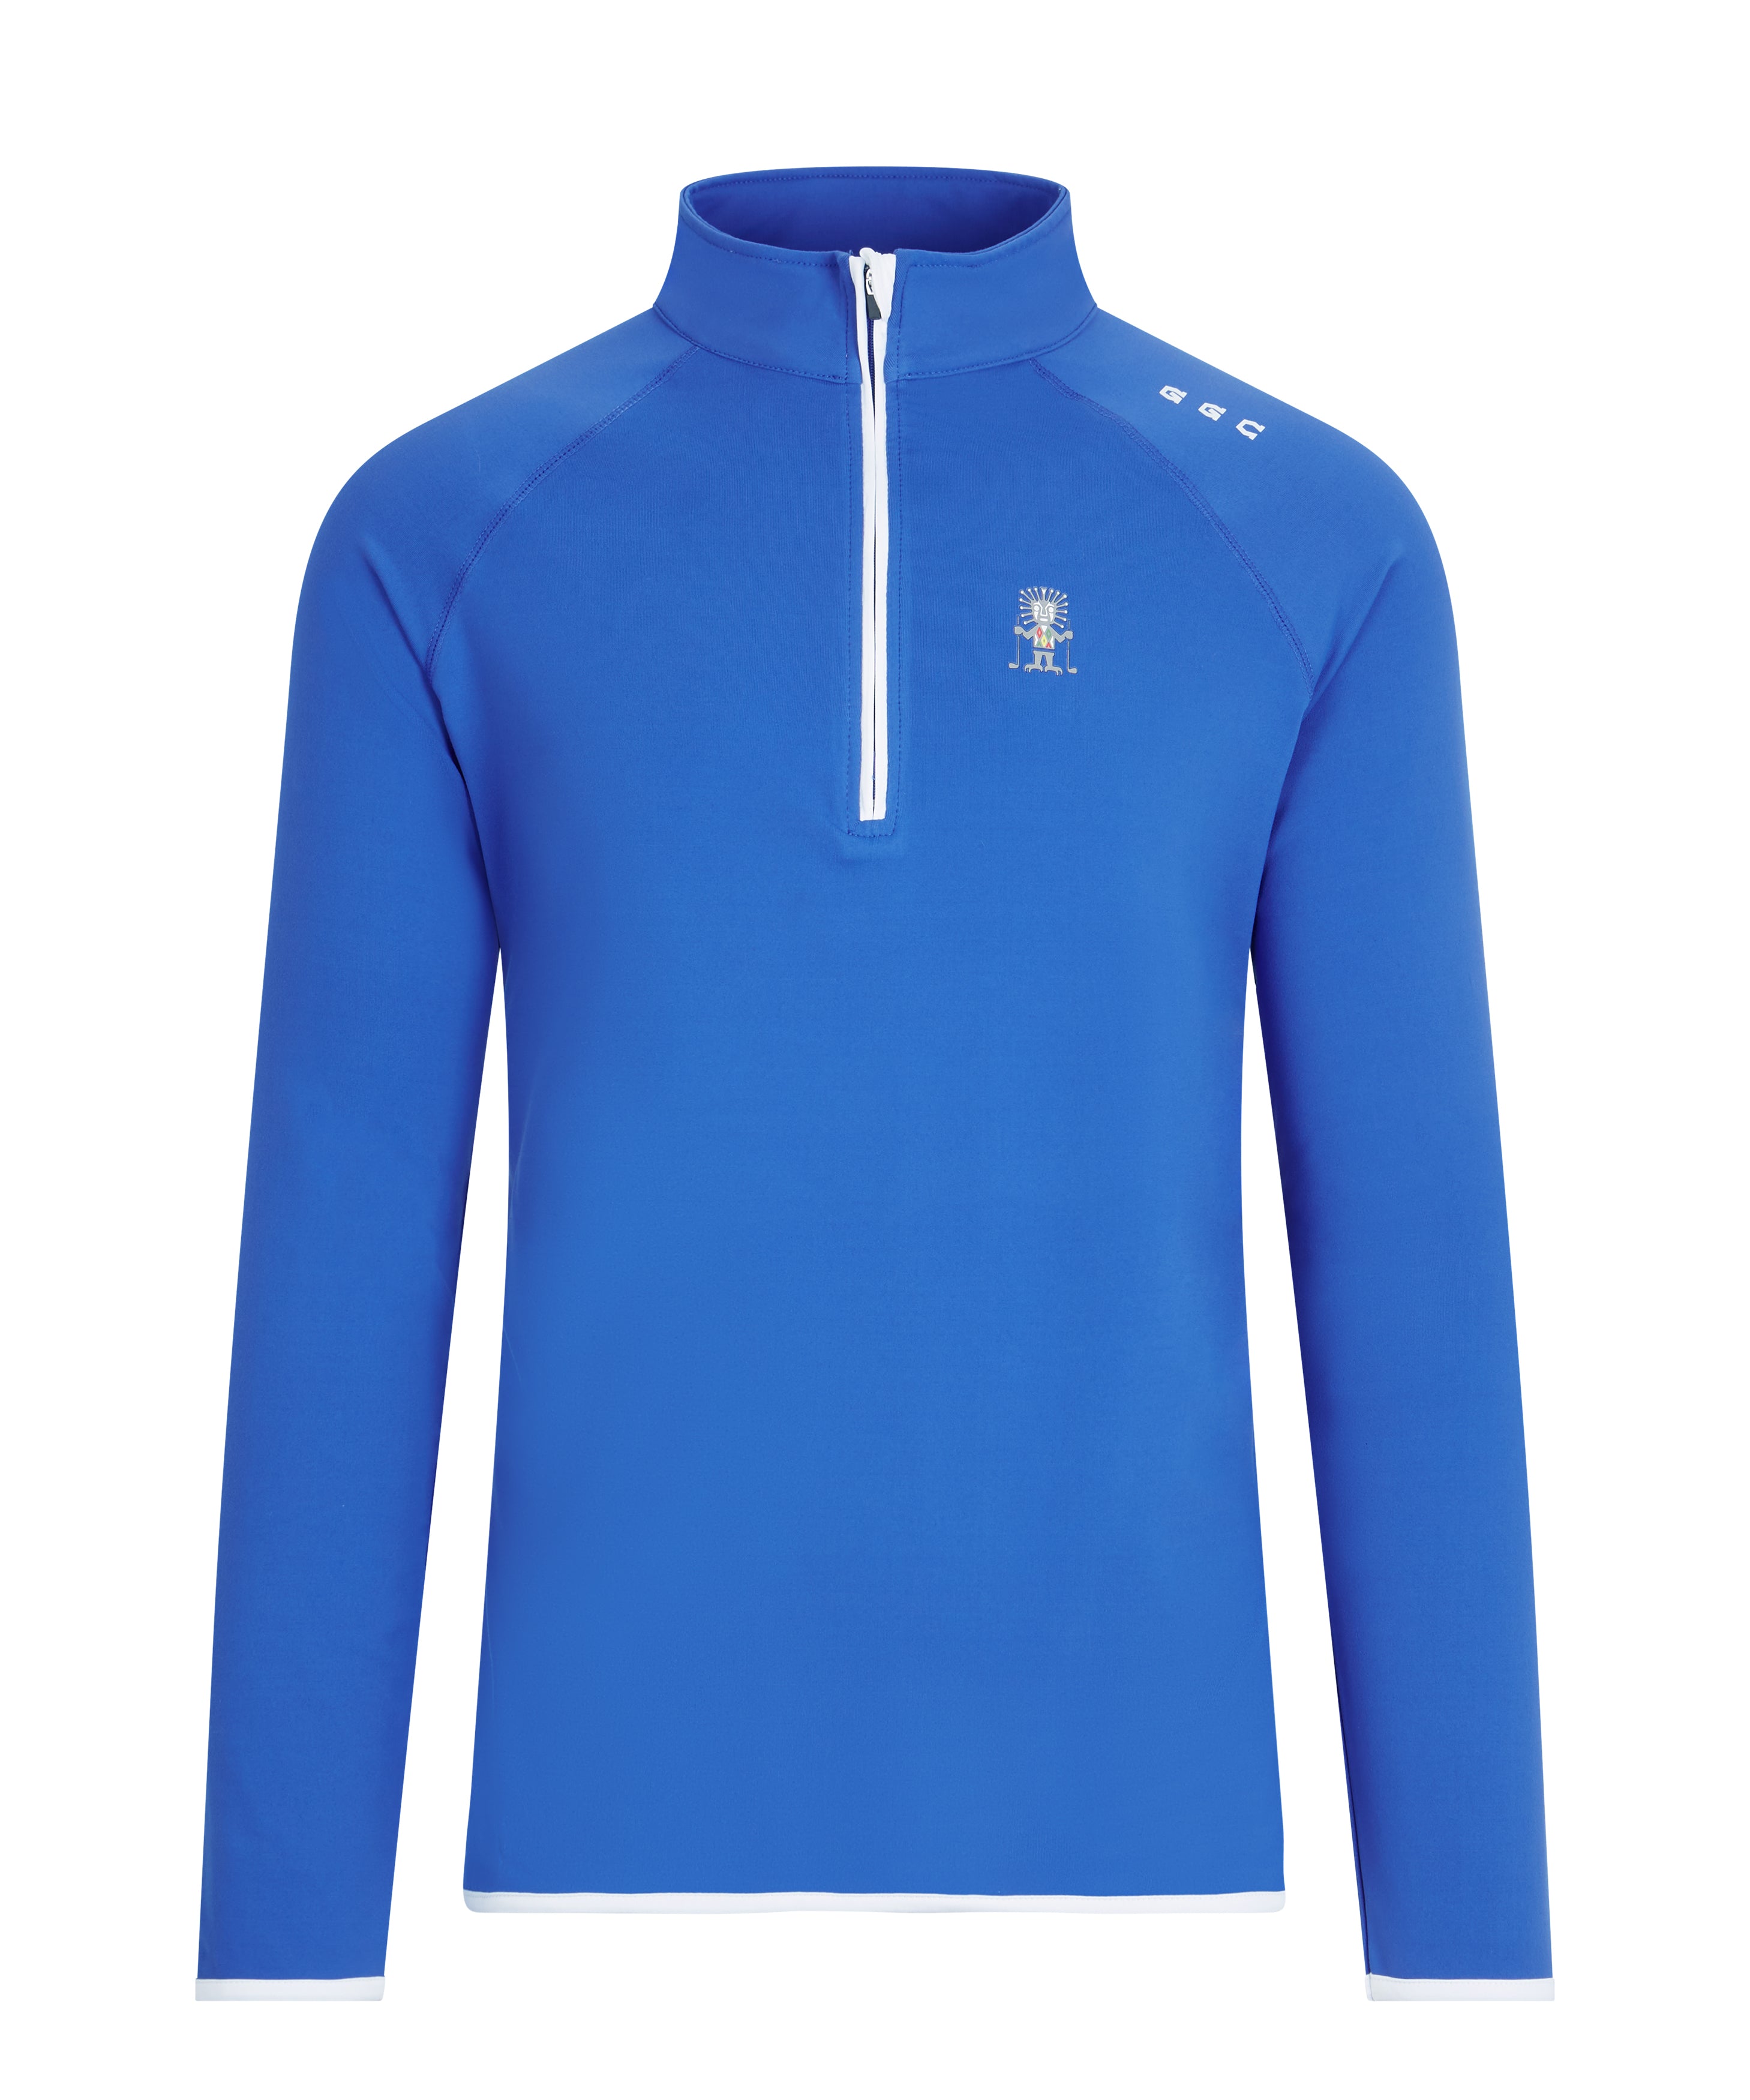 golf god clothing classic royal blue 1/4 zip mid layer